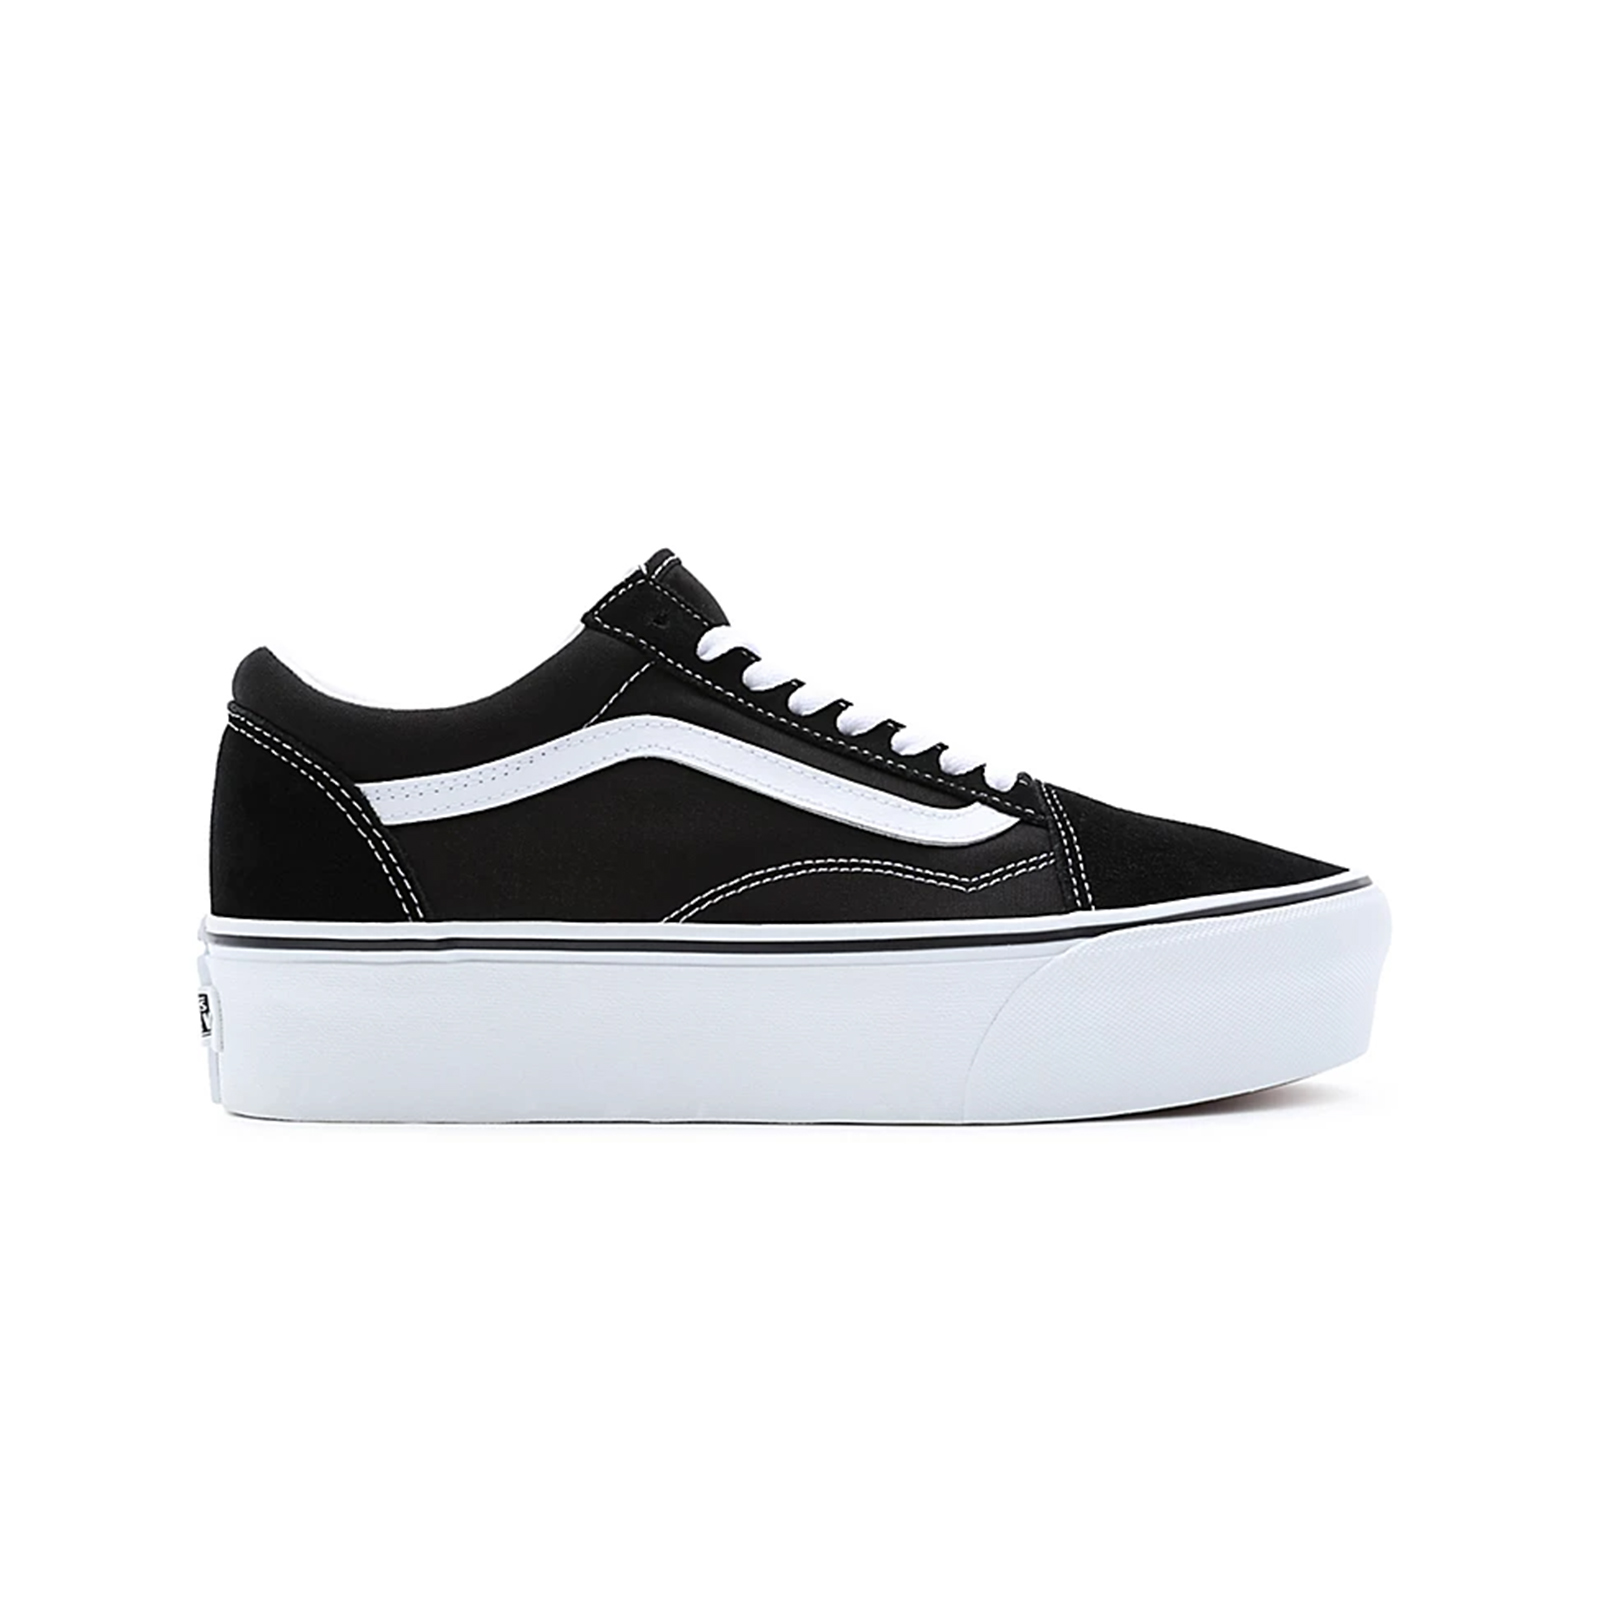 Vans - UA OLD SKOOL STACKFORM - BLACK/TRUE WHIT Ανδρικά > Παπούτσια > Sneaker > Παπούτσι Low Cut